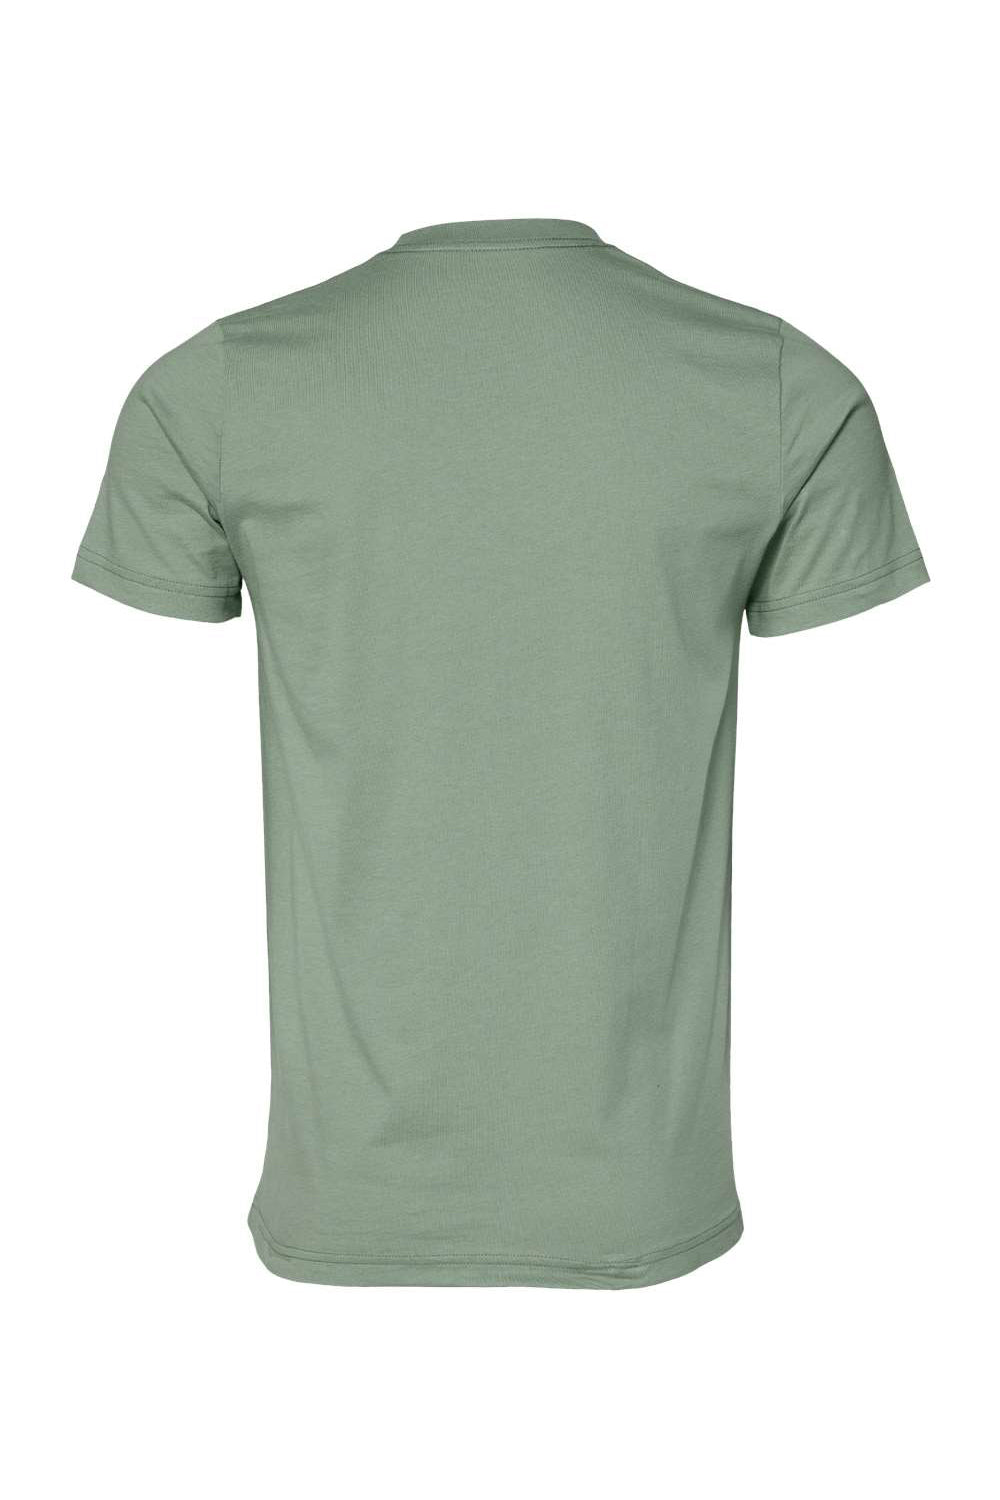 Bella + Canvas BC3001/3001C Mens Jersey Short Sleeve Crewneck T-Shirt Sage Green Flat Back